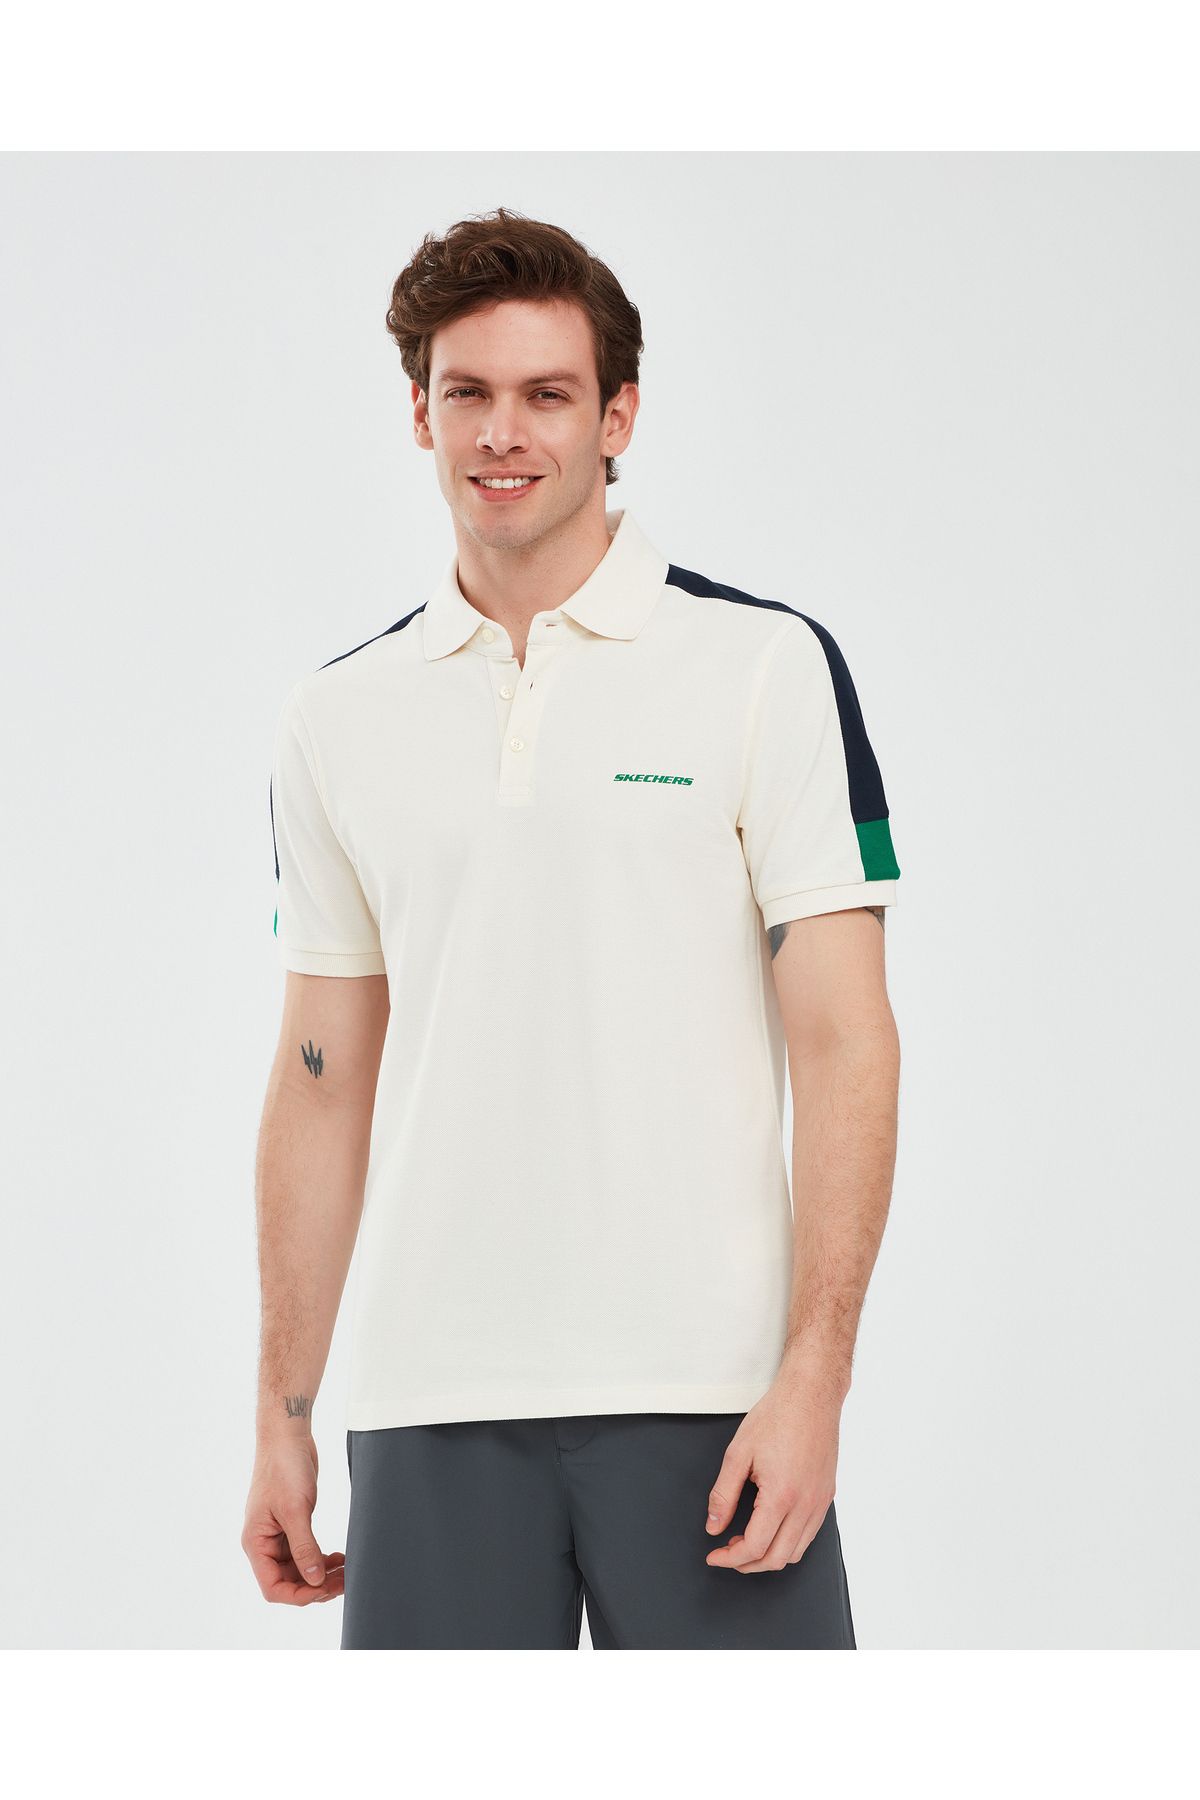 Skechers M Colorblock Polo T-shirt Erkek Beyaz Polo Yaka Tshirt S221047-102